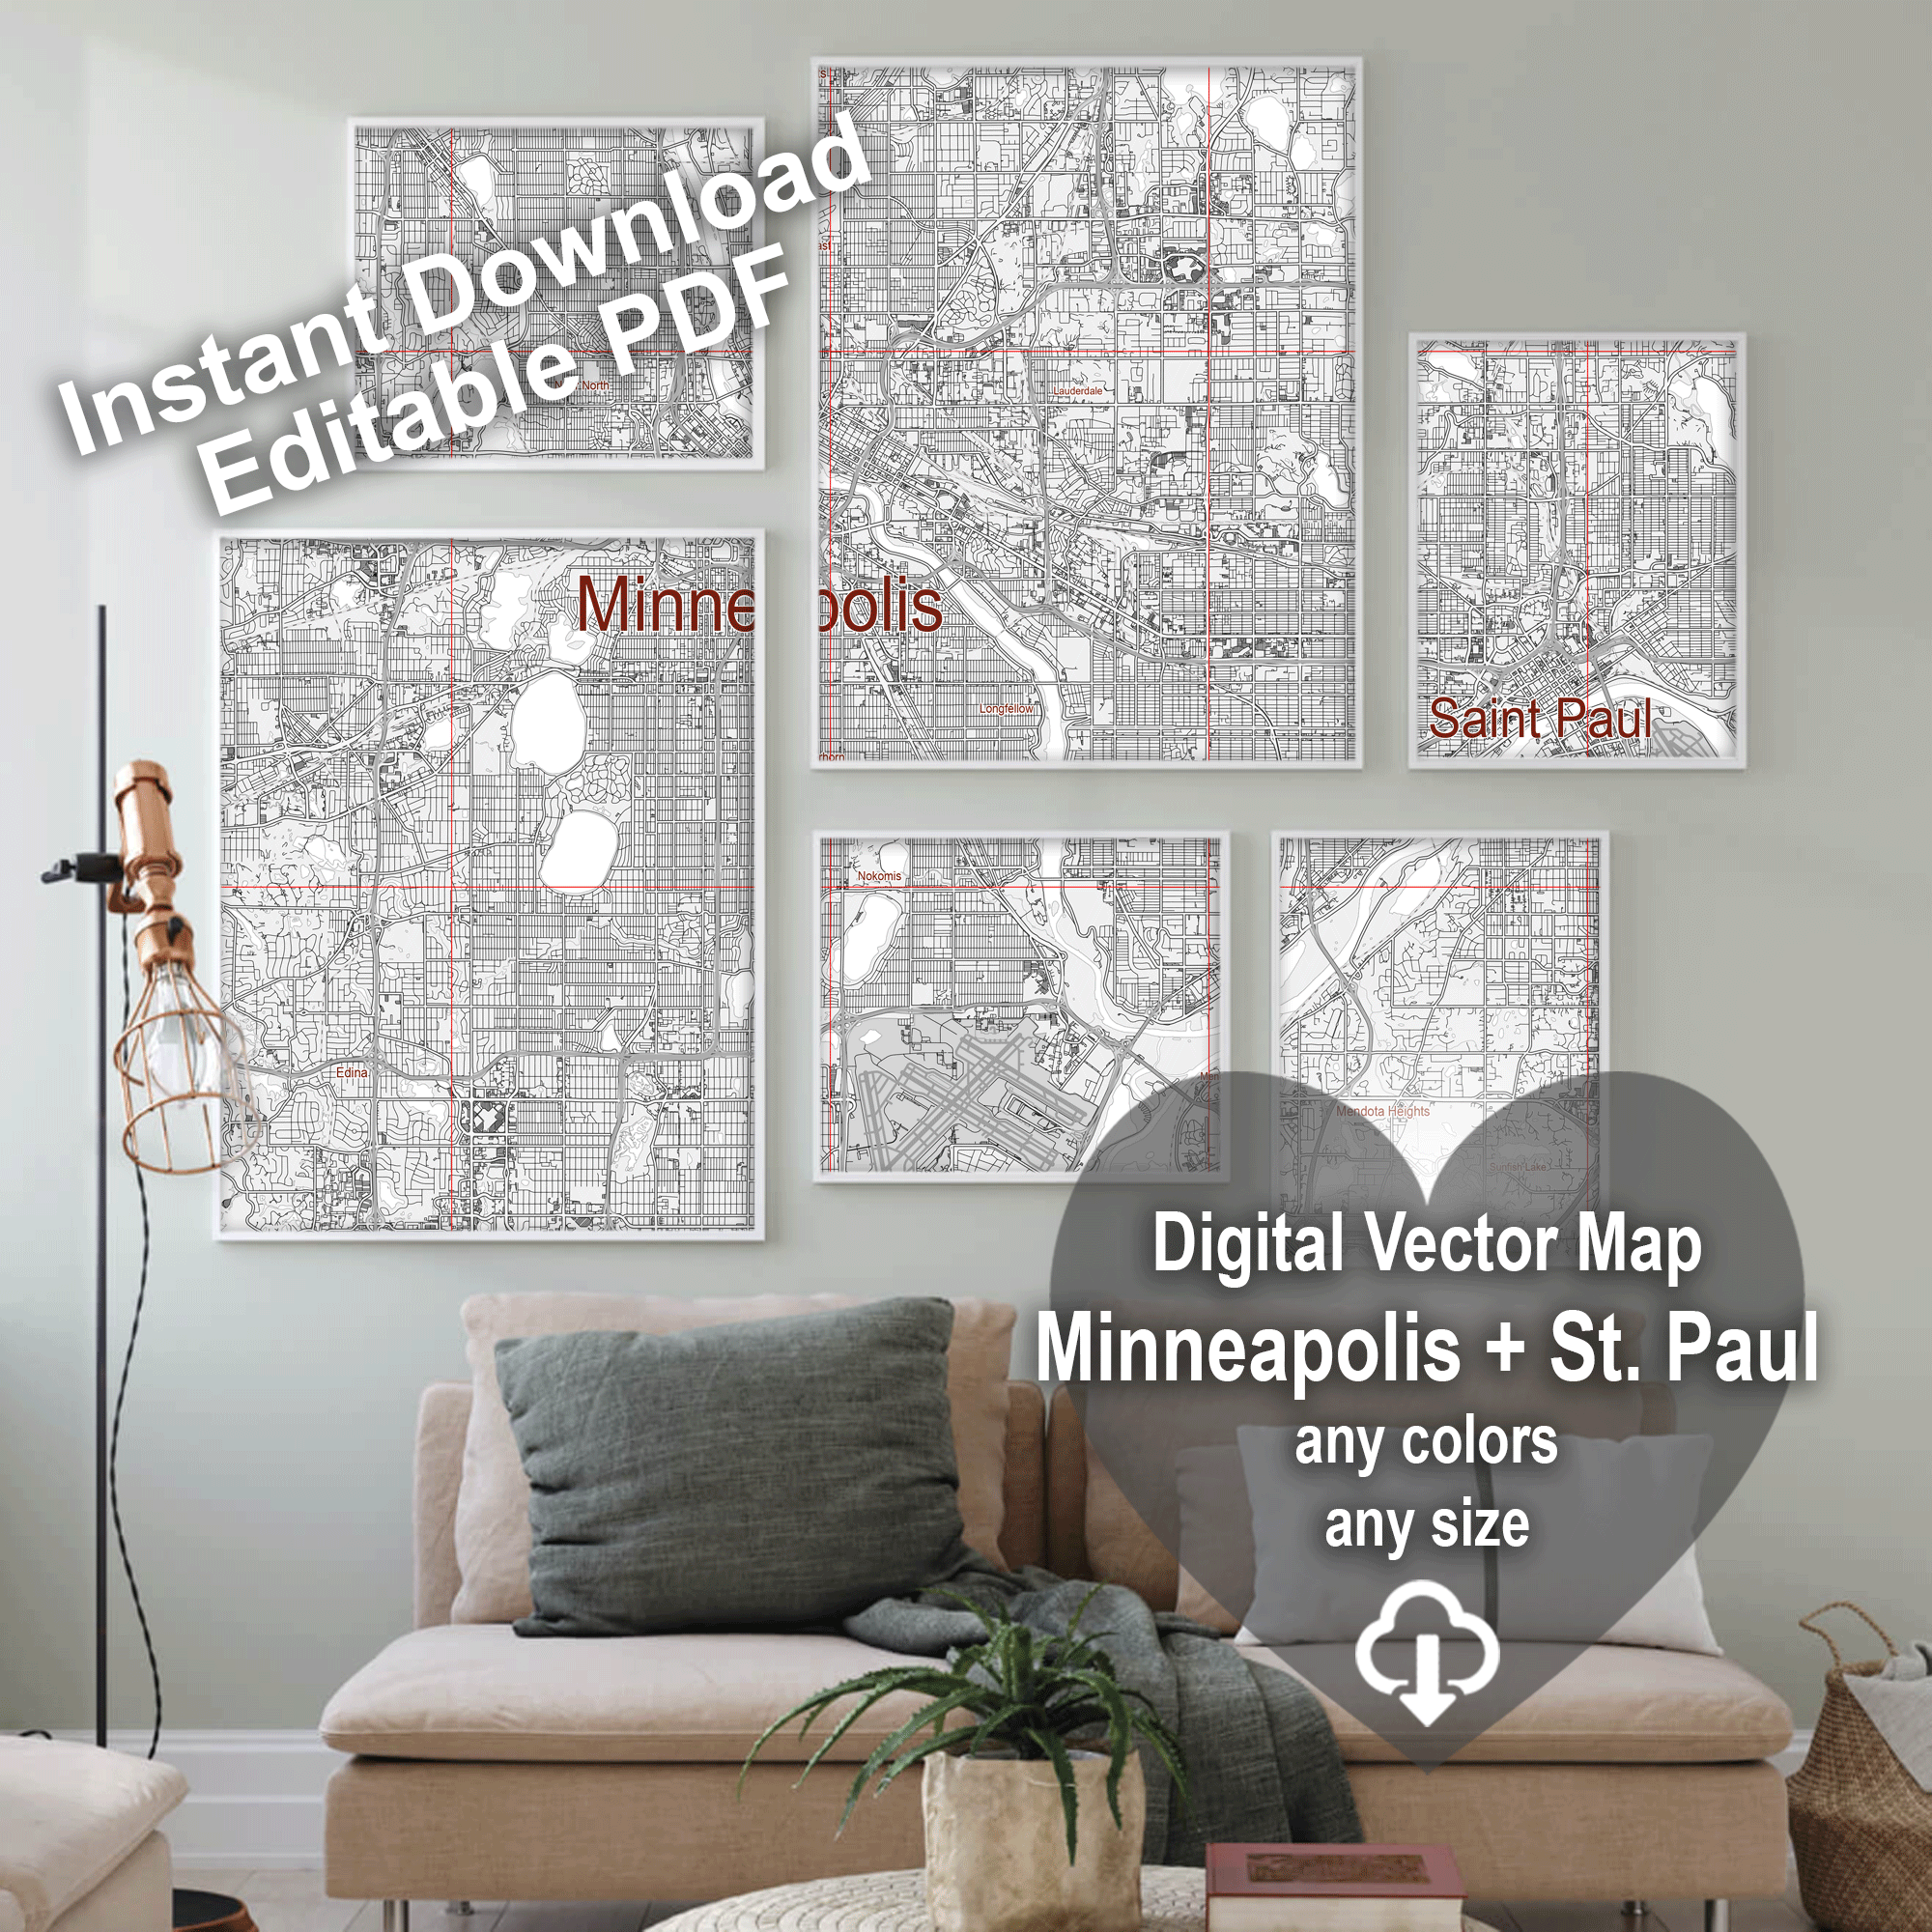 Minneapolis Sent Paul Minnesota US Map Vector City Plan Low Detailed (simple white) Street Map editable Adobe Illustrator in layers